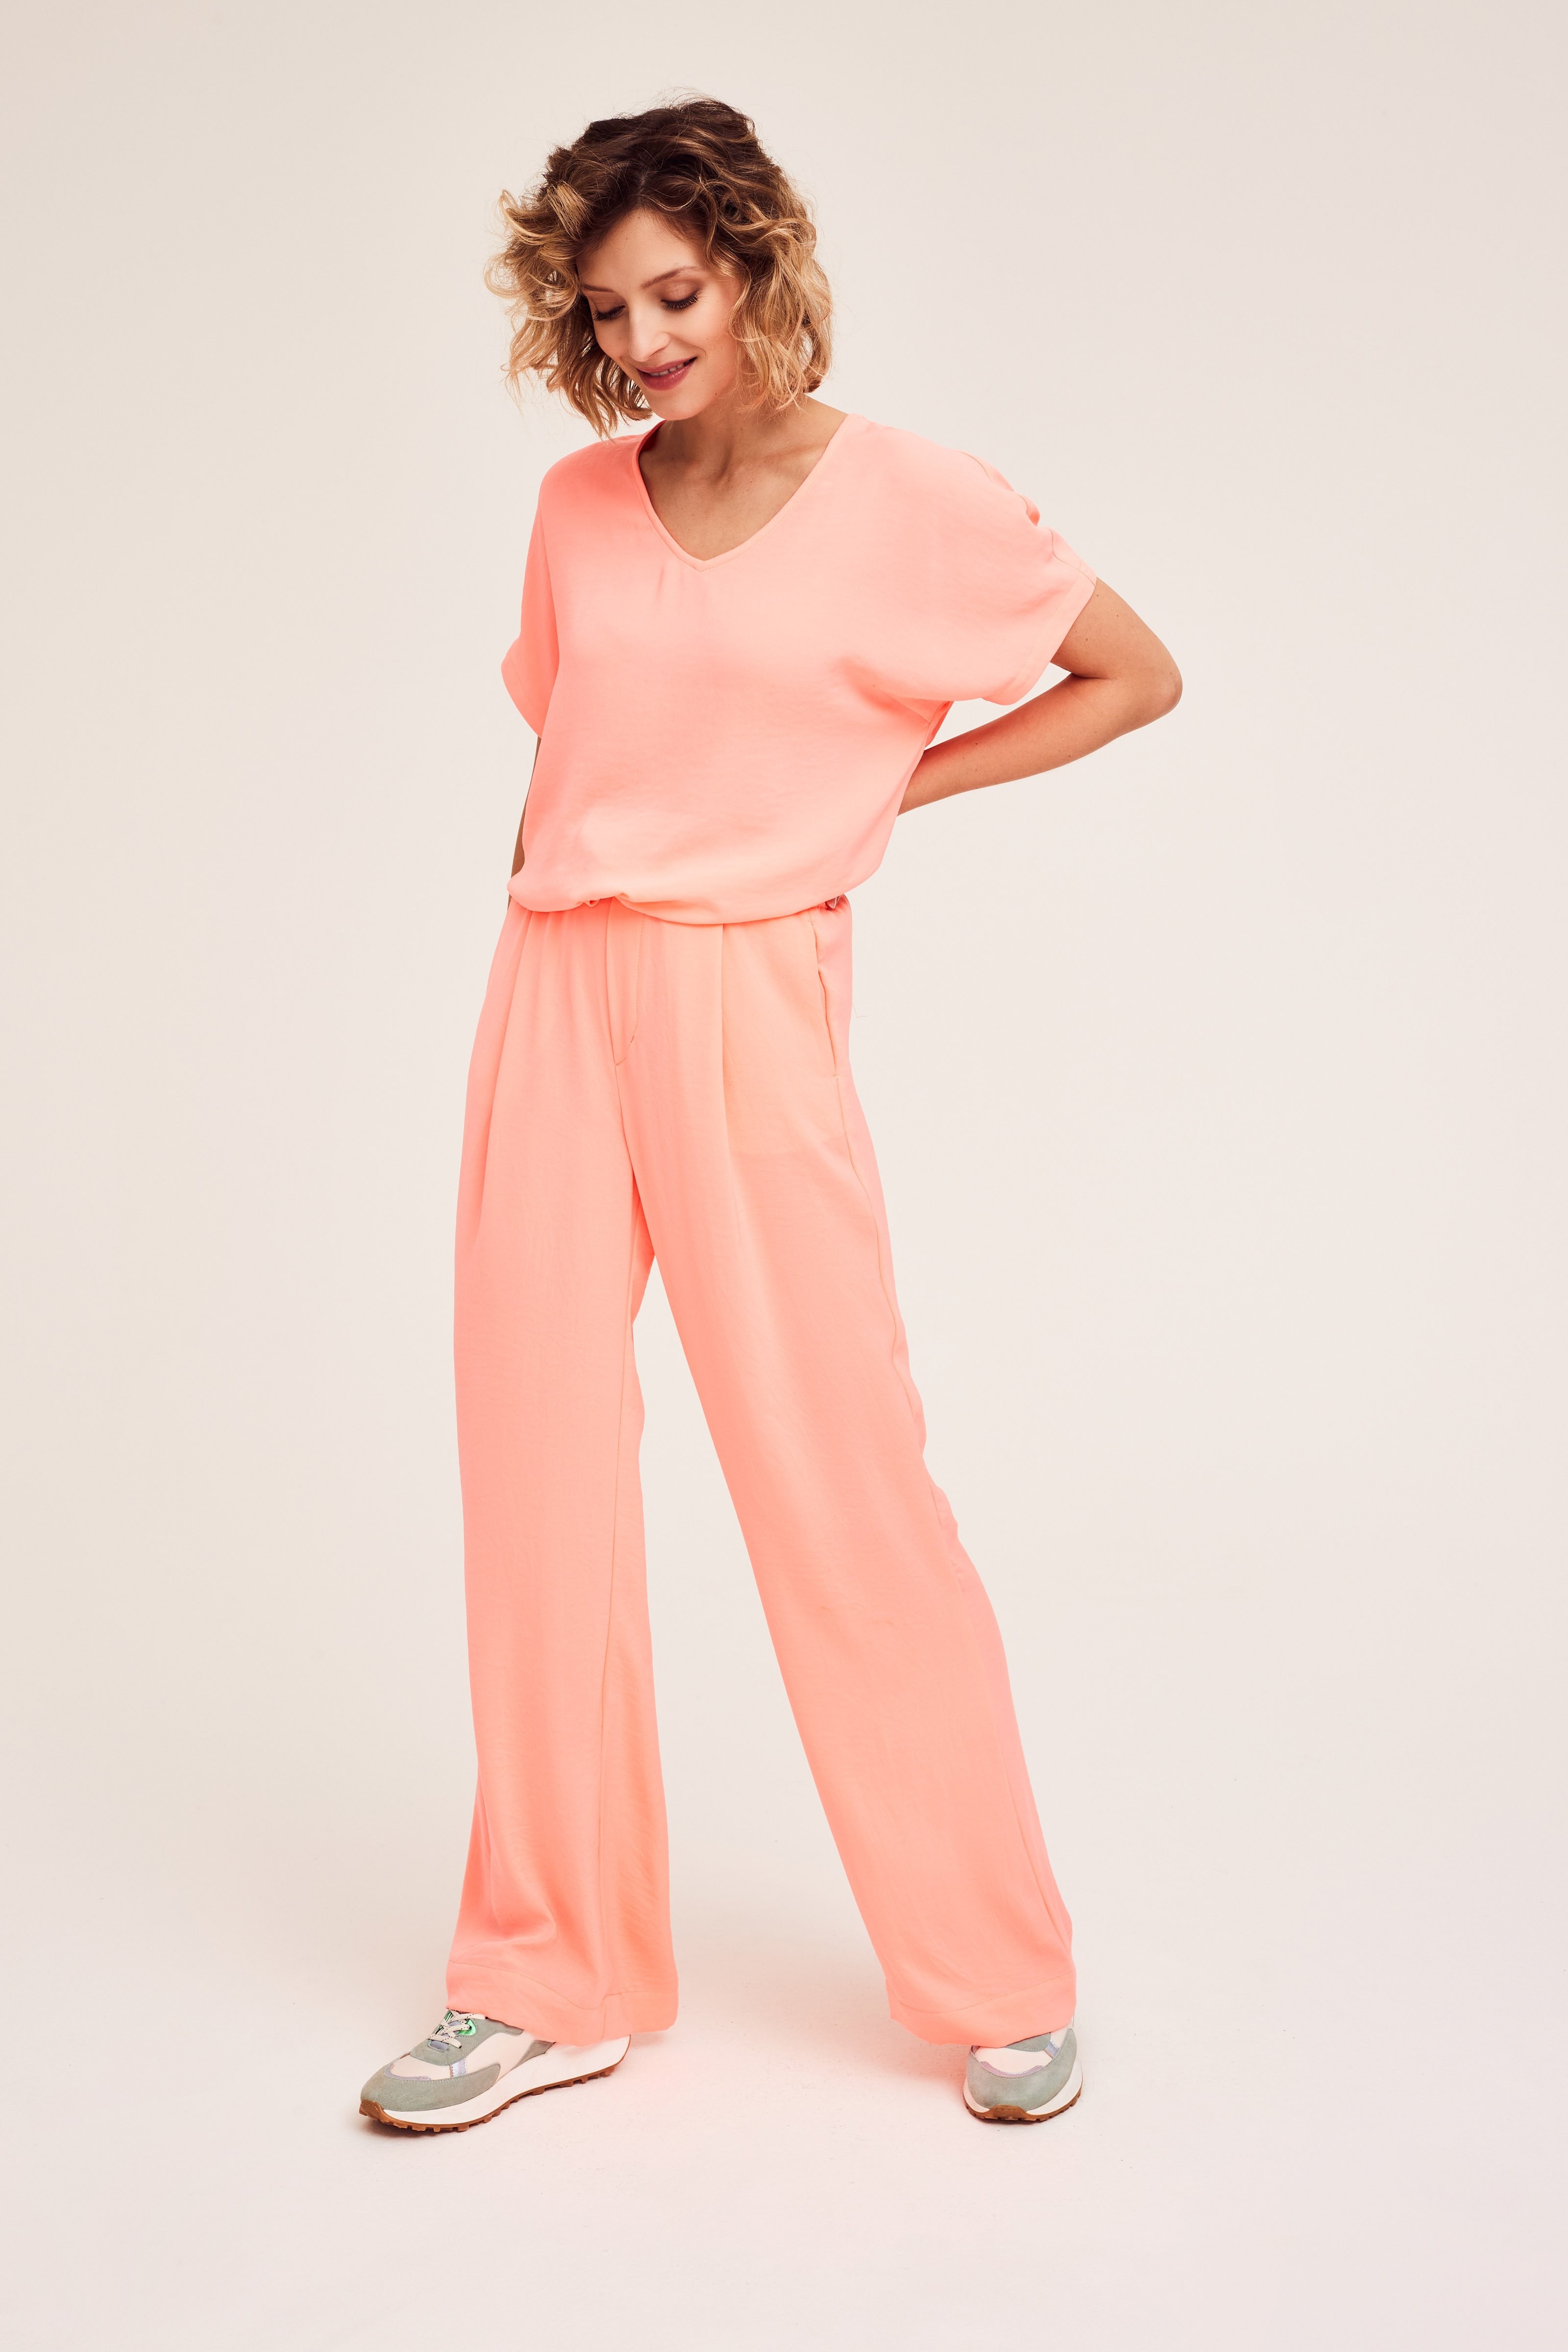 CKS Dames - EBINAS - blouse korte mouwen - roze